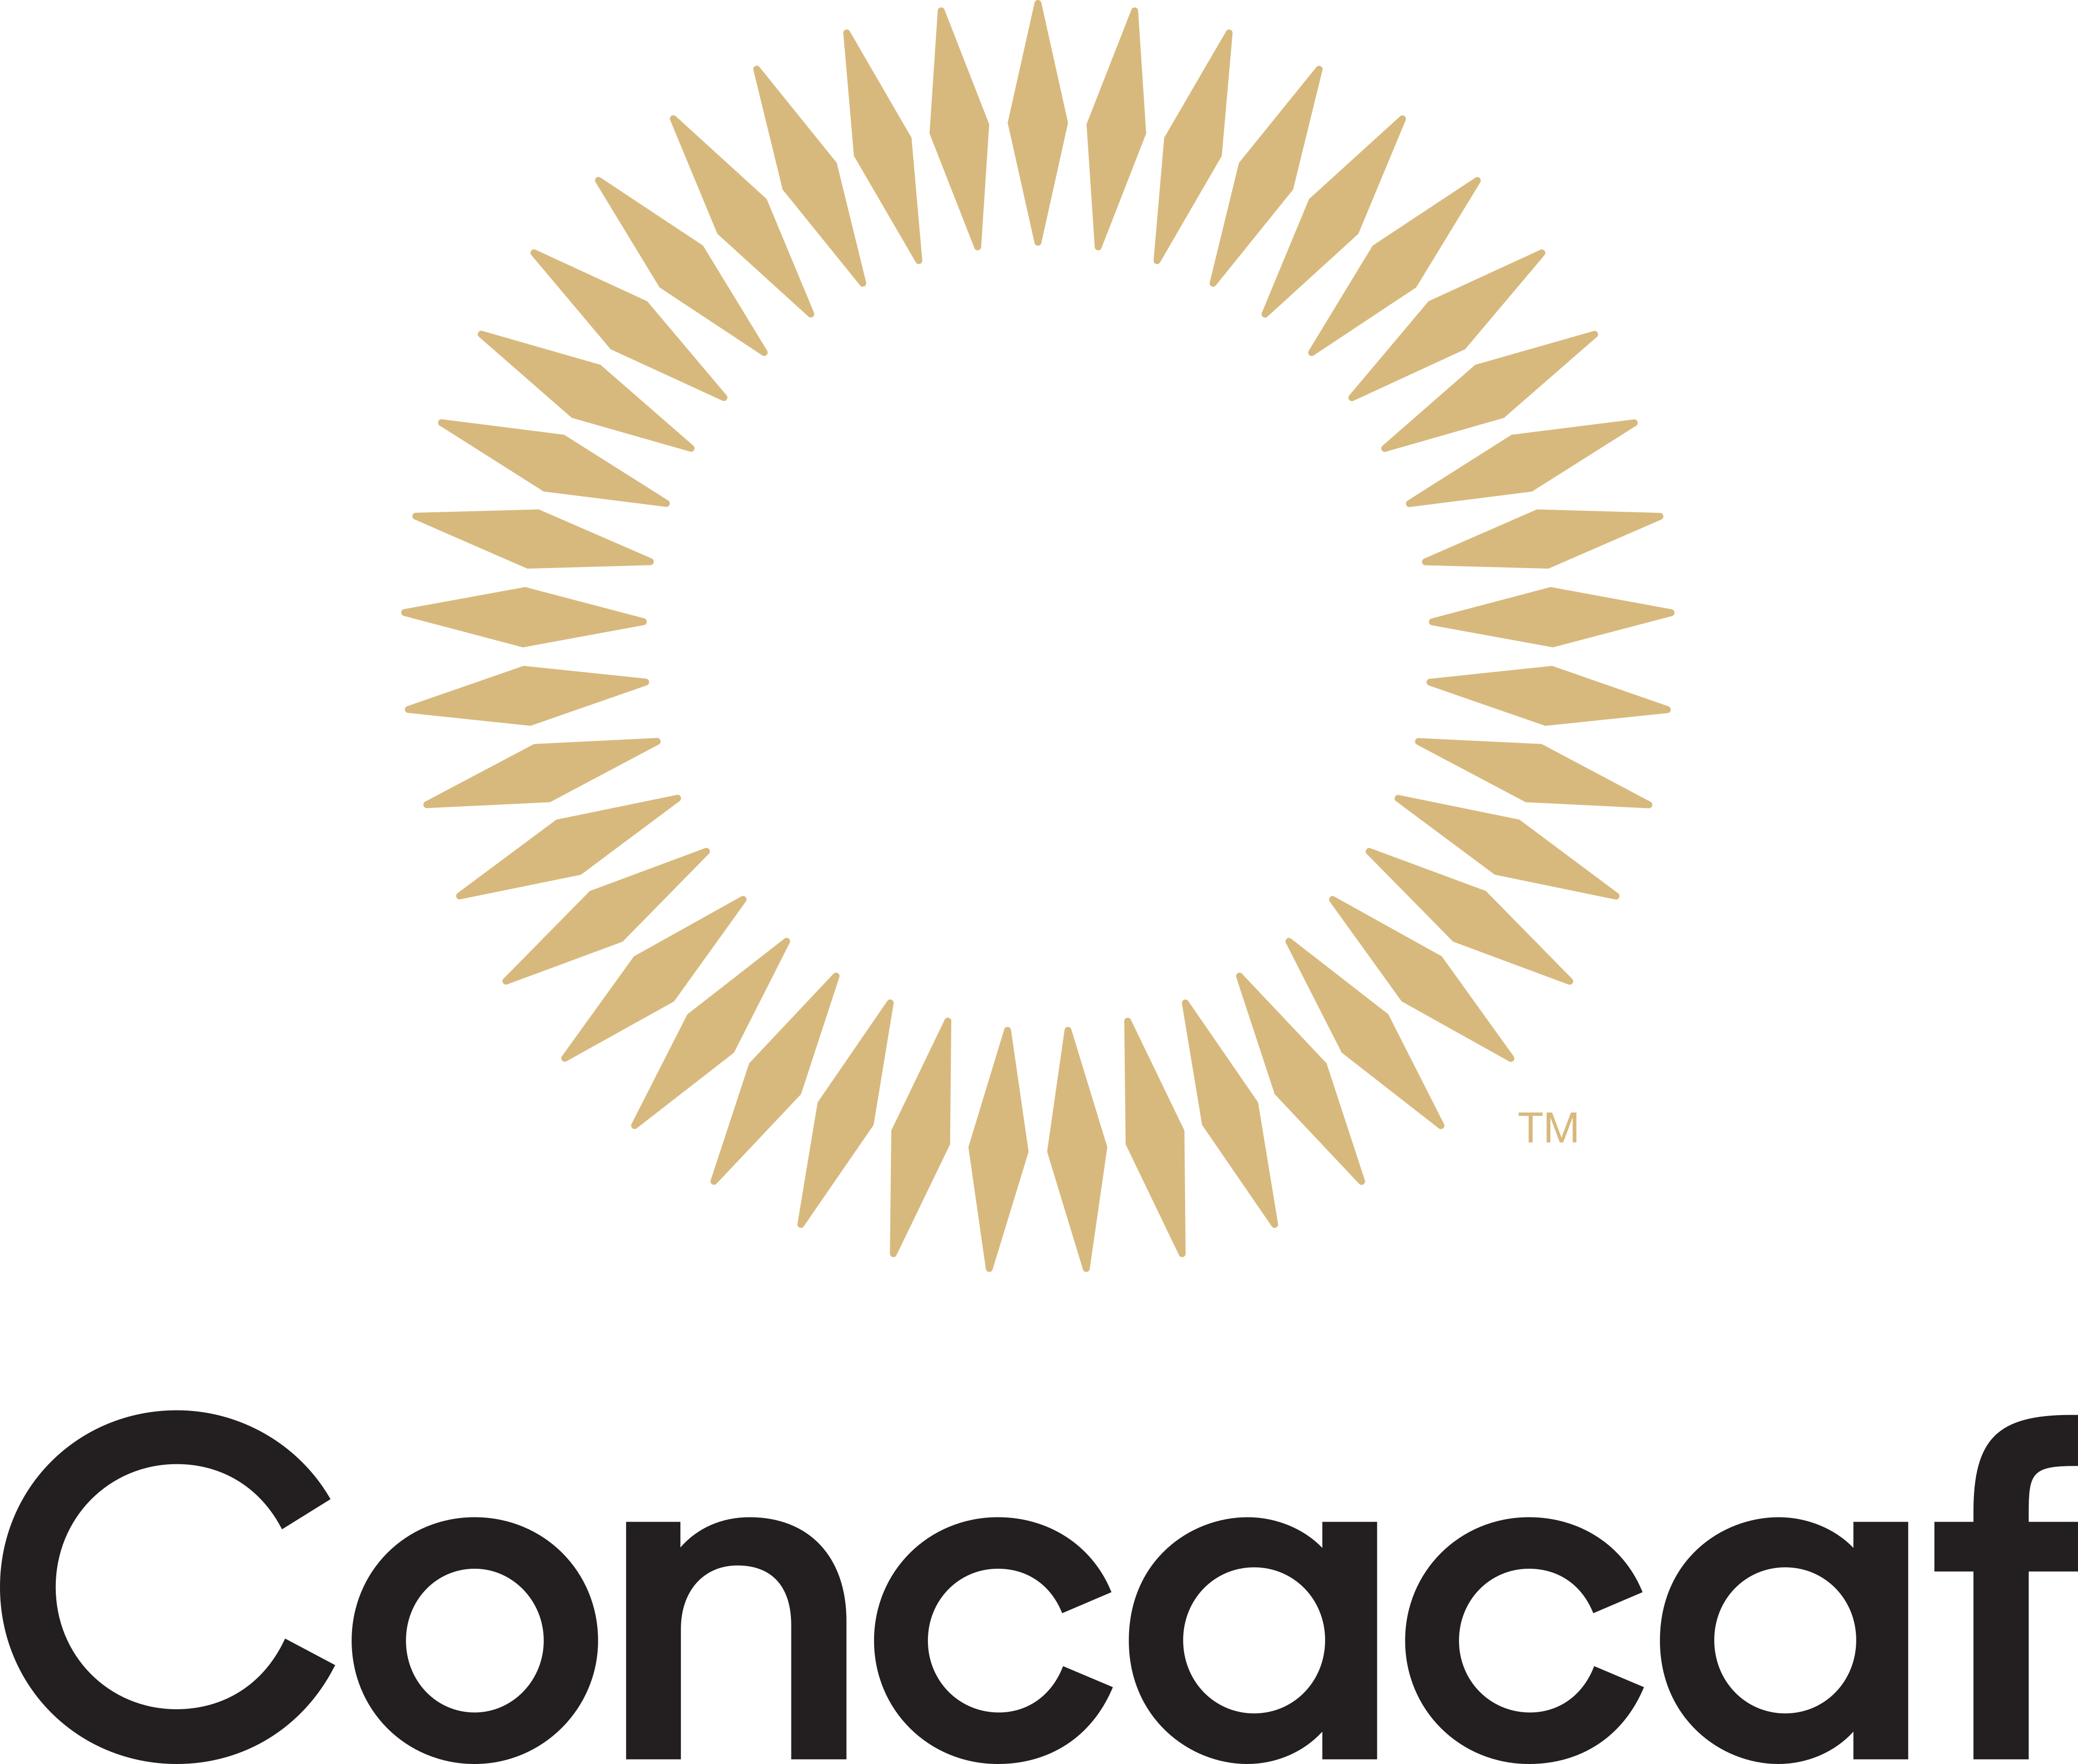 CONCACAF Logo.